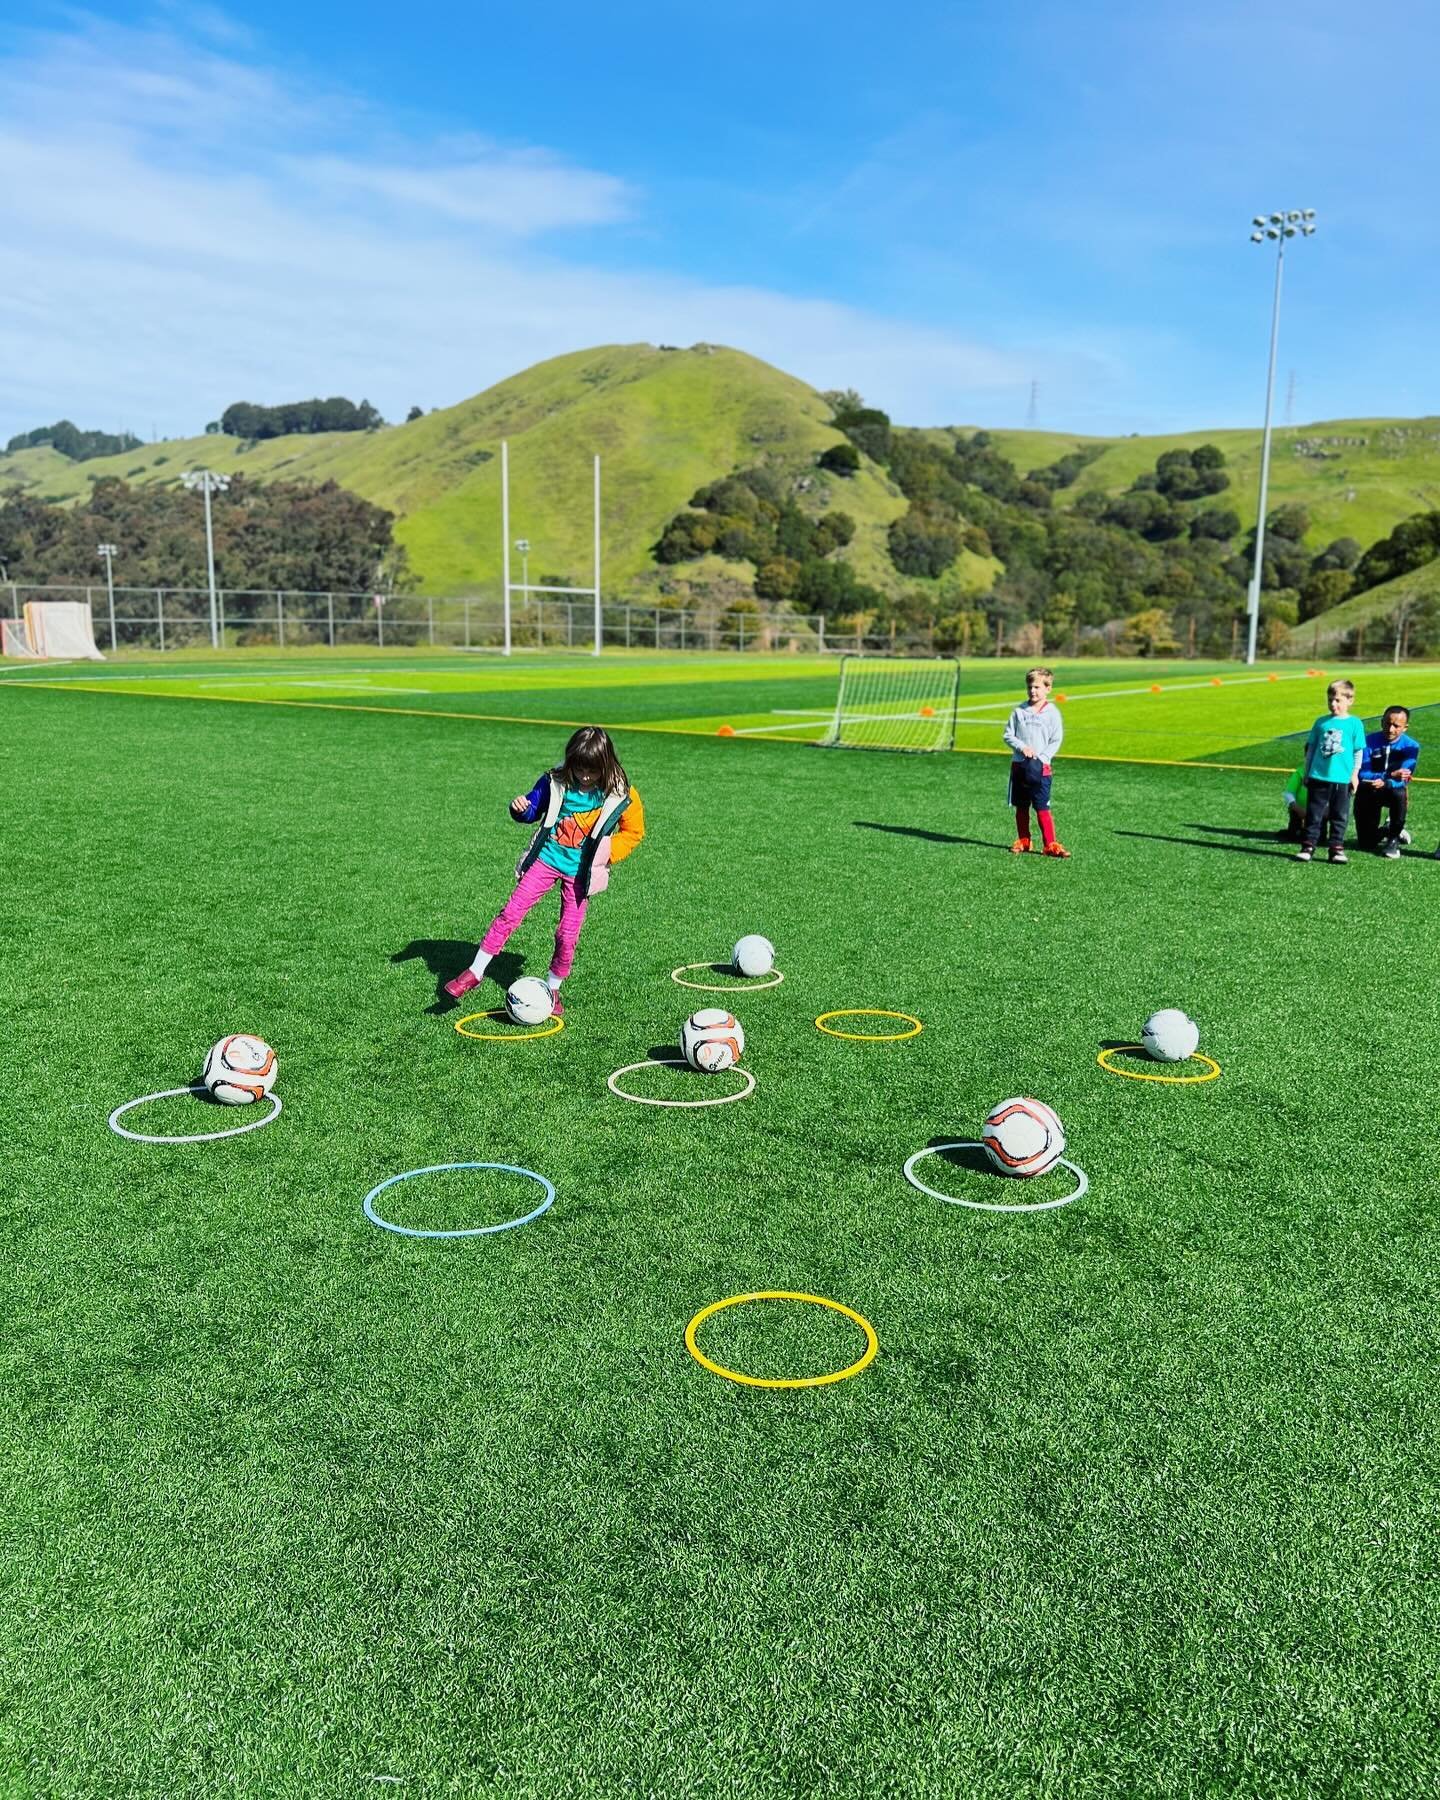 Tic-tac-toe with soccer balls 😃❤️⚽️ 

#soccerdays #soccerdayscamps #youthsoccer #orindasoccer #lamorindasoccer #soccerfun